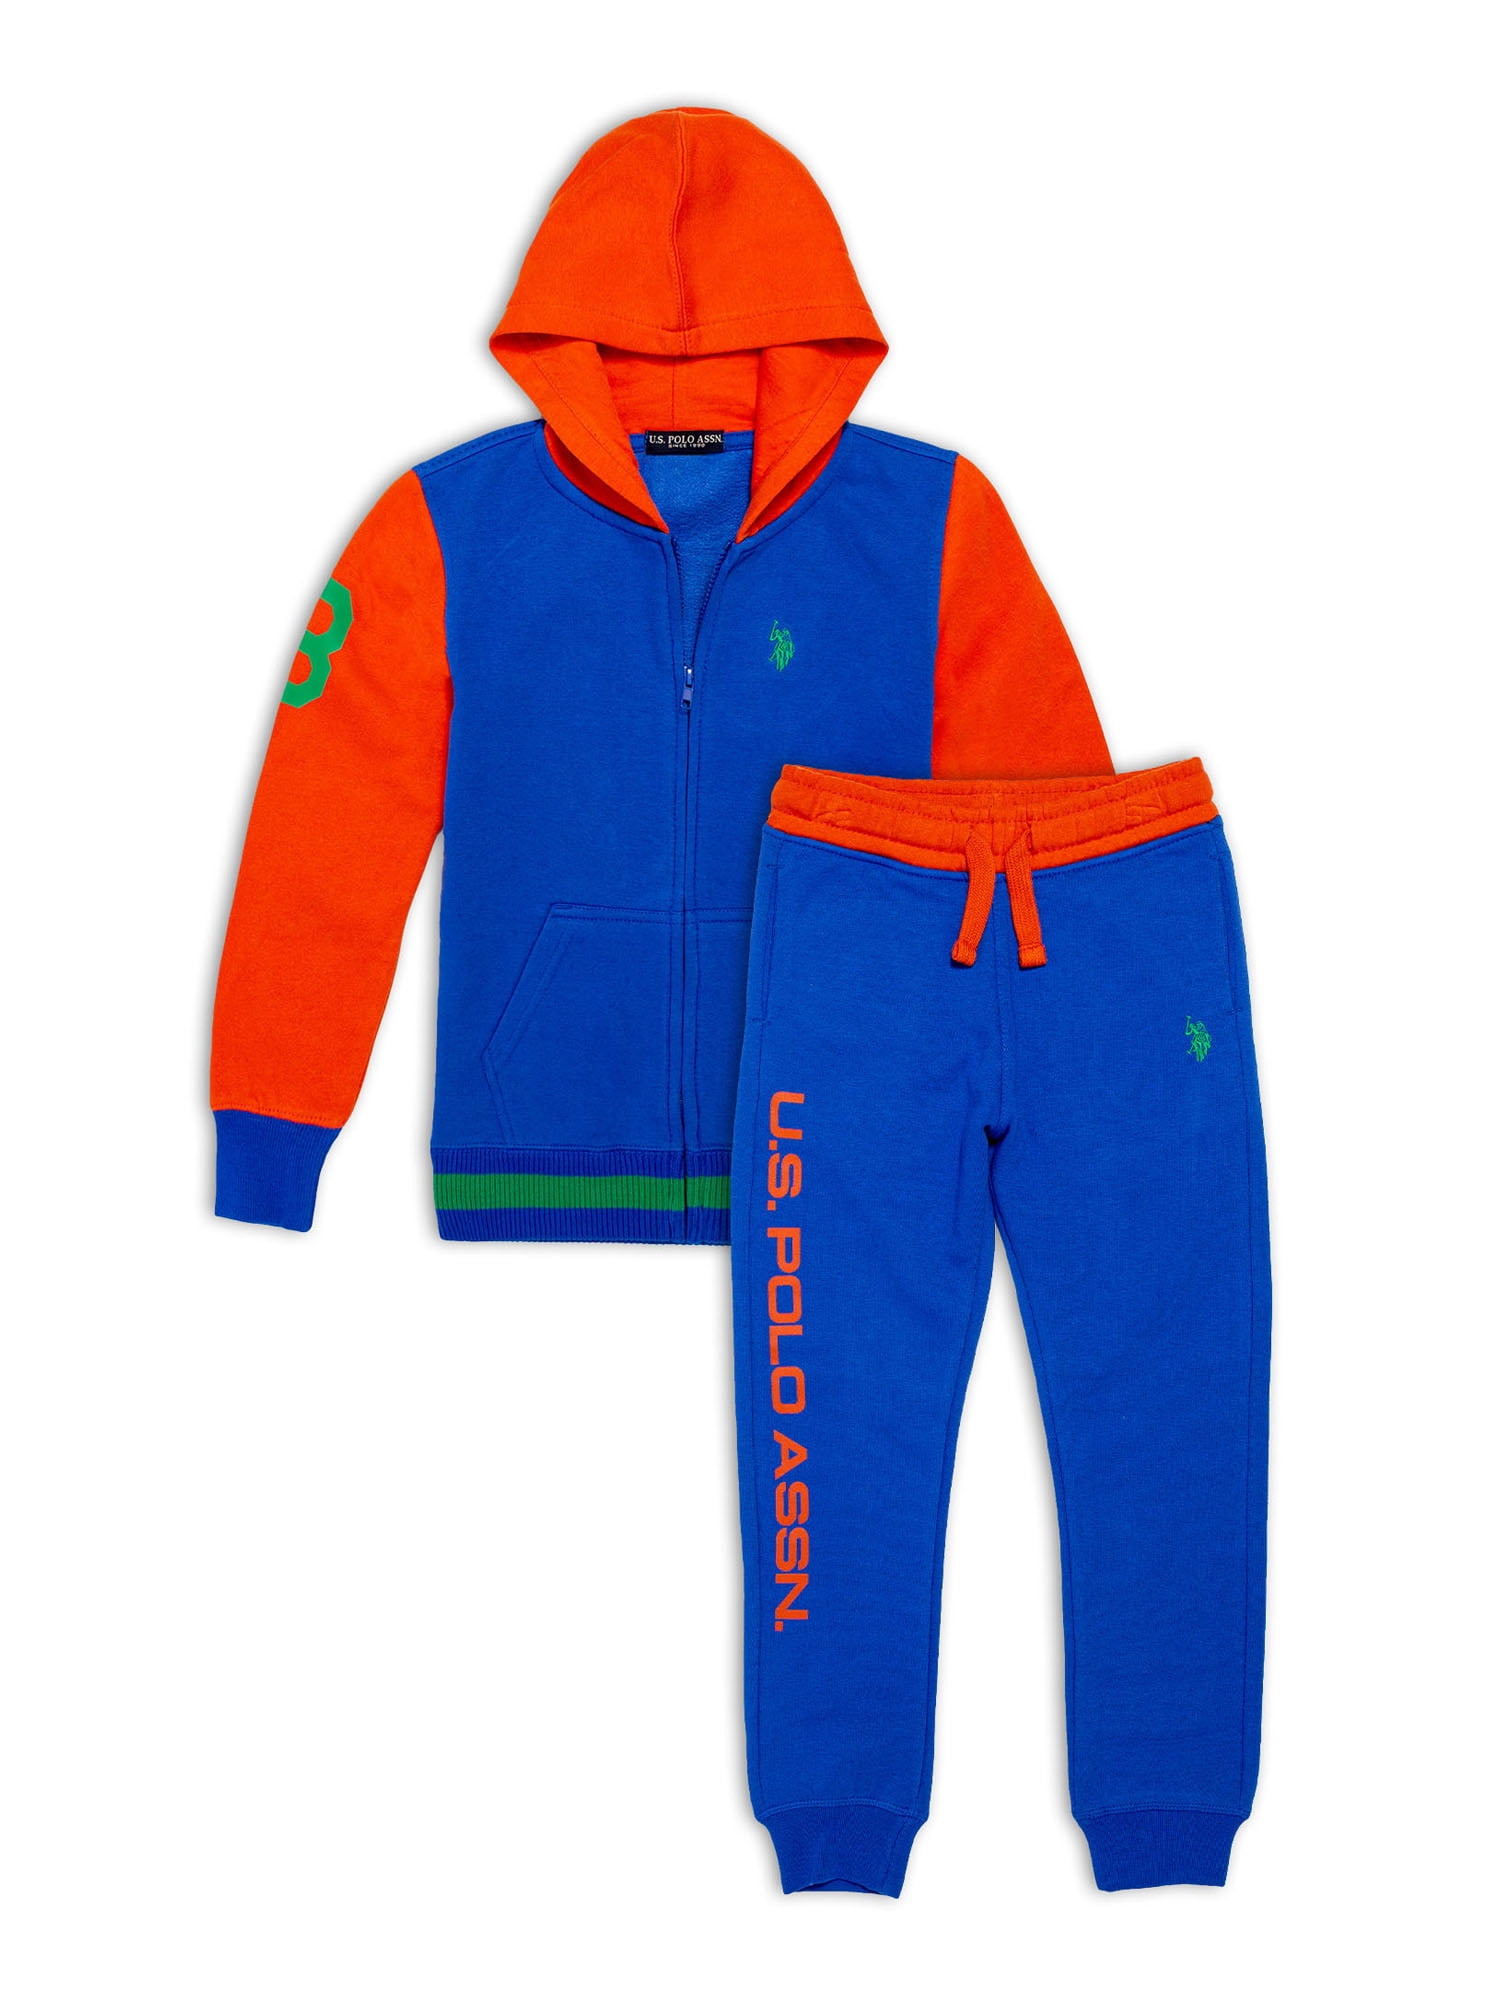 Boys 2 Pieces Outfit/Set-Hoodie,Tracksuit Jogging Suit Pants&Top NY 3-12ys #160 